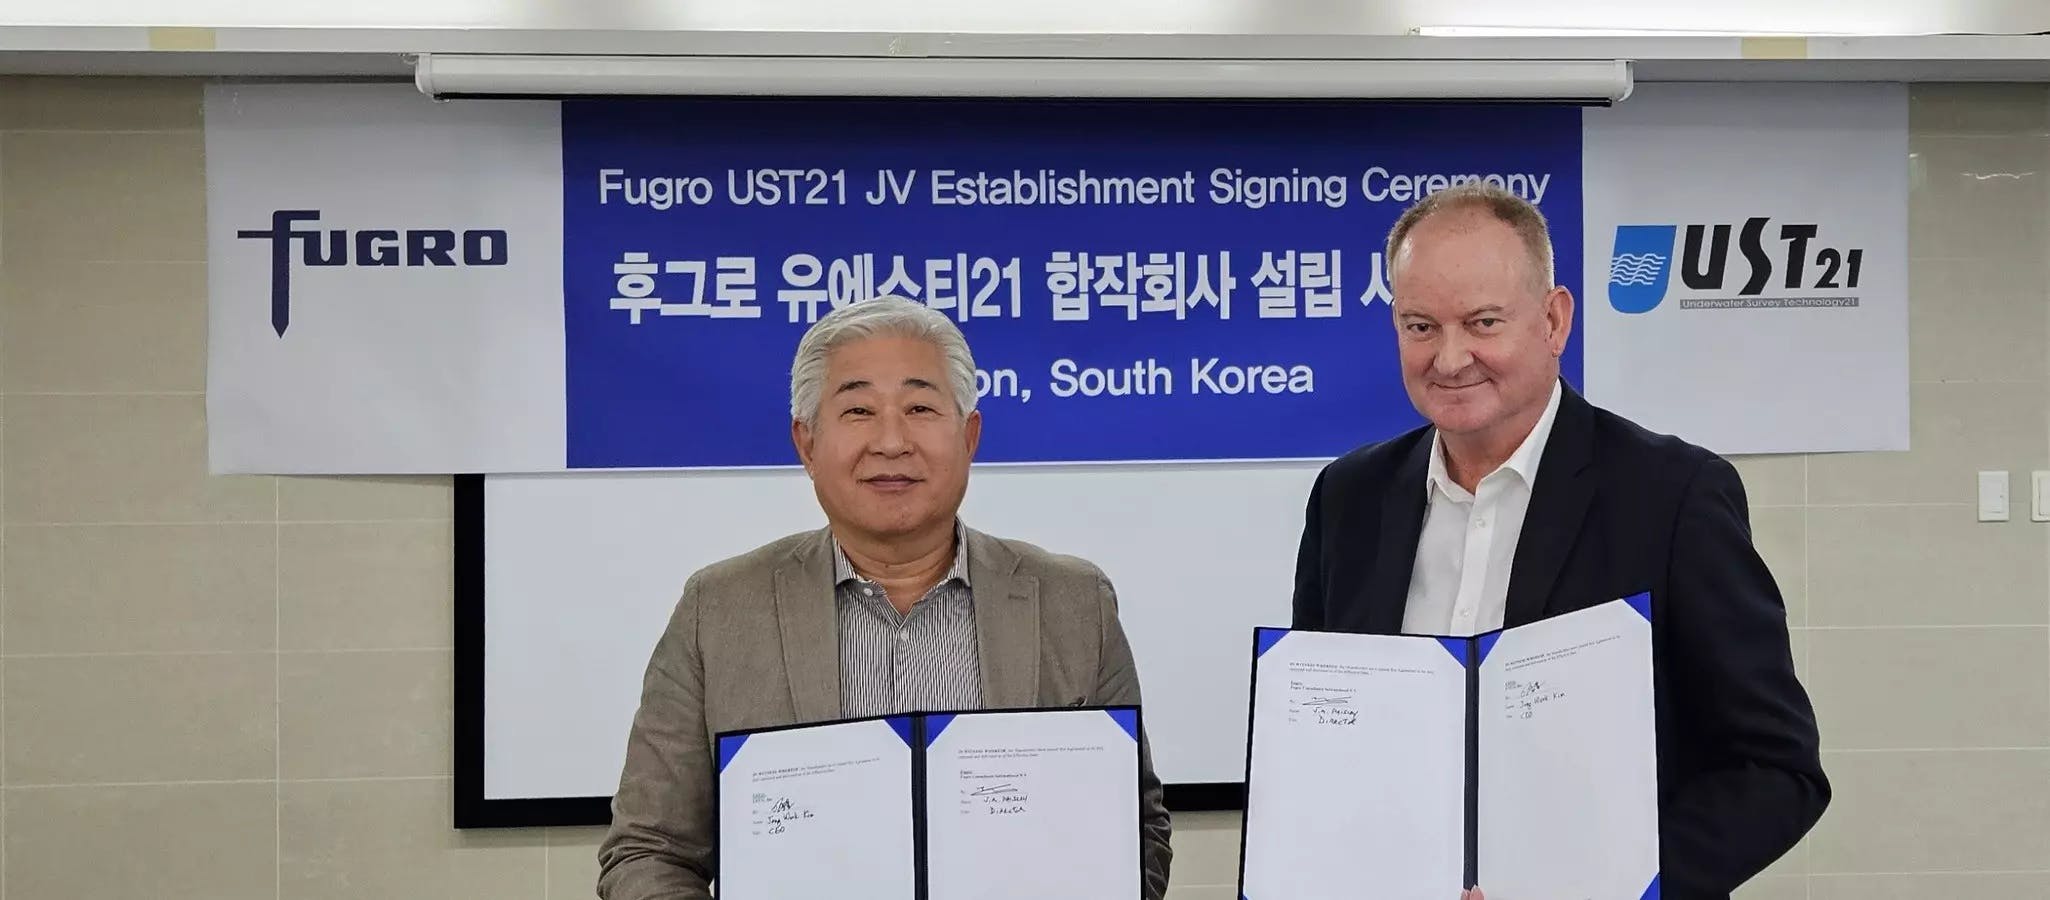 FUGRO UST 21 open office in Korea . UST21 CEO Jongwook Kim and Fugro 'Regional SSM Director, Jerry Paisley